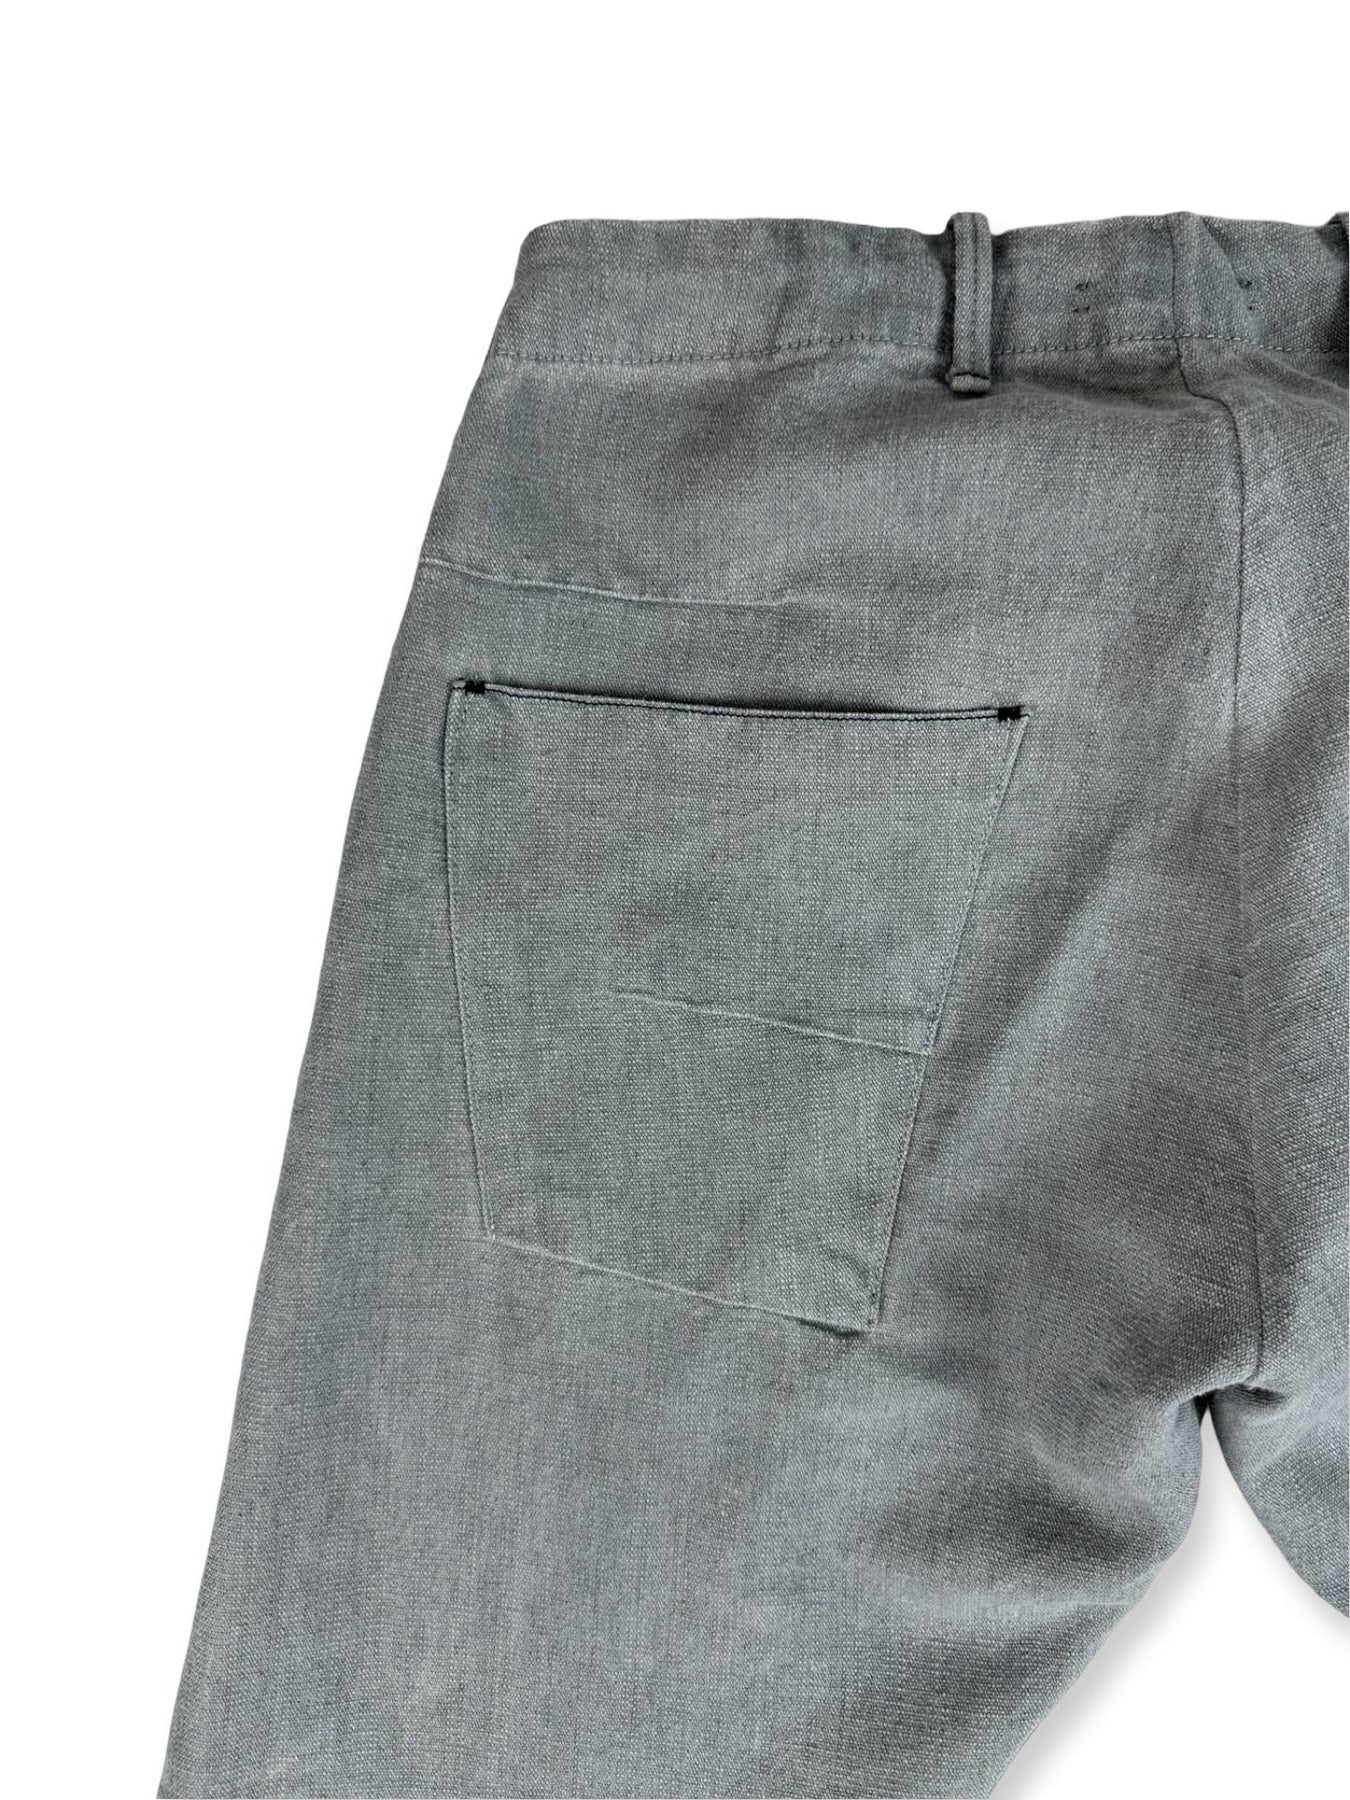 MATIAS Rivera Tenshi Vidrio Men's Trouser